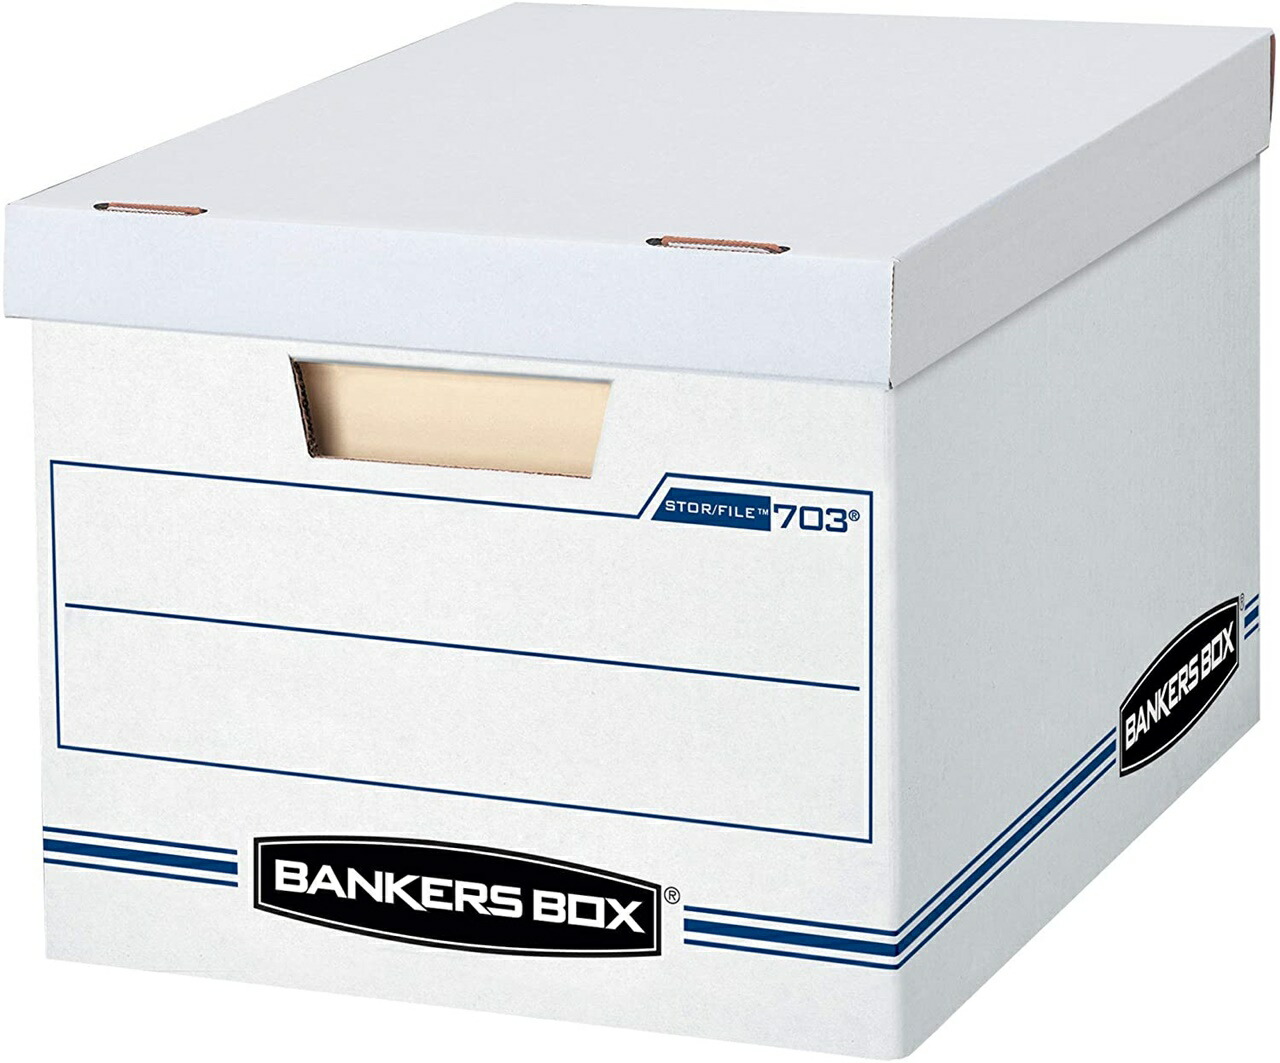 USA直輸入品 Brand: Bankers Box 書類の保管や小物の整理に 収納ボックスの定番 バンカーズボックス 6個セット 収納ボックス Box製 30.5cm×25.4cm×38cm 往復送料無料 梱包 出し入れ簡単なフタ式 丈夫なつくり 片付け 人気デザイナー おしゃれ ダンボール素材 シンプル 引っ越し 703ボックス